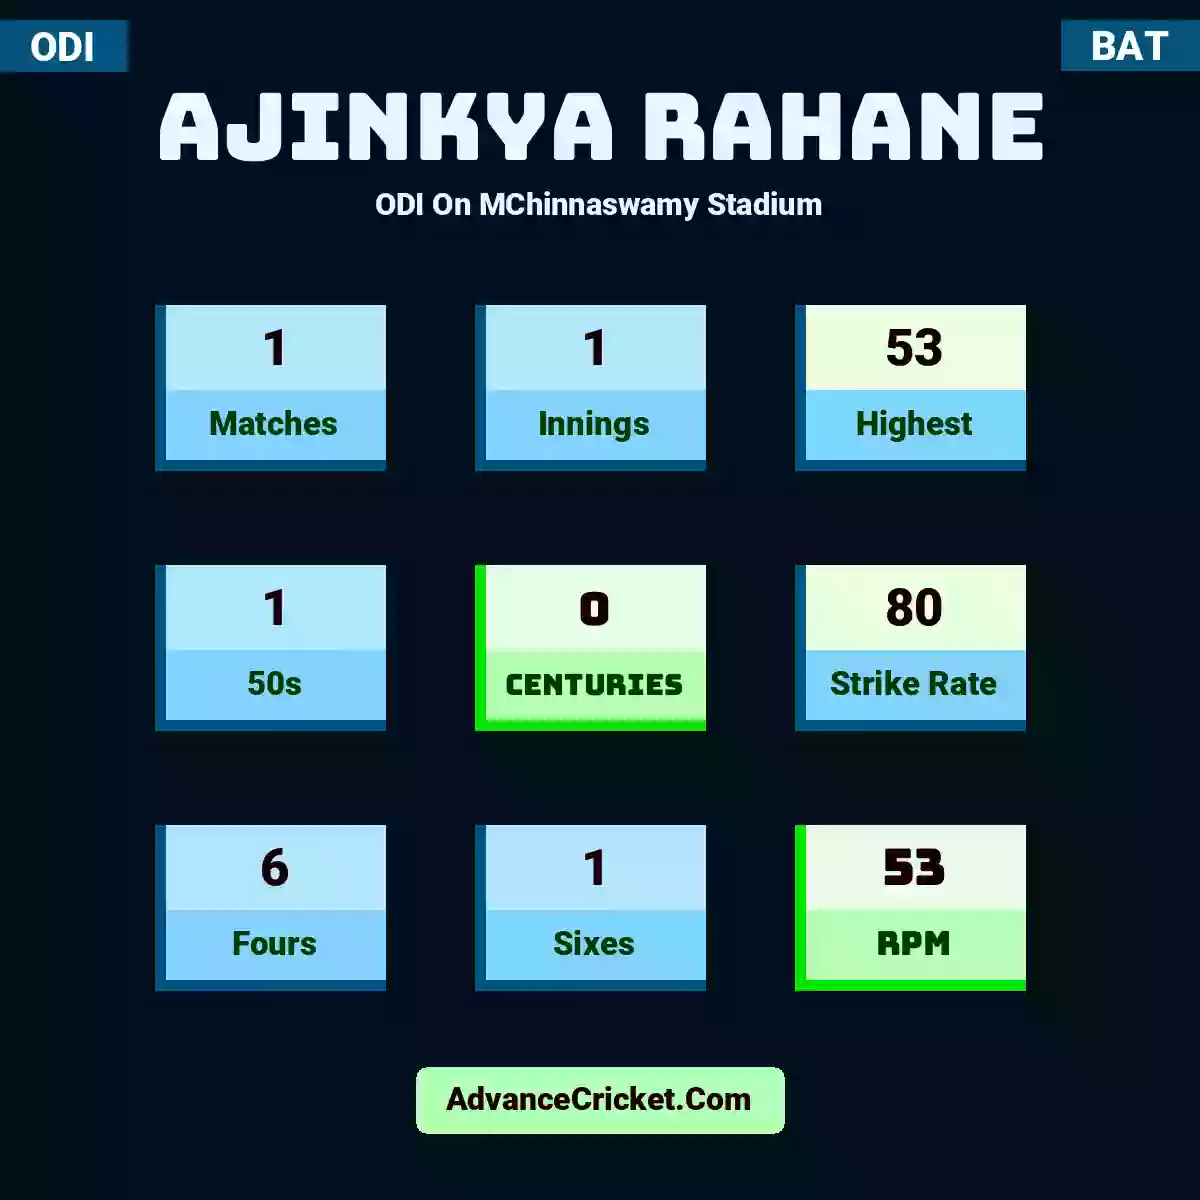 Ajinkya Rahane ODI  On MChinnaswamy Stadium, Ajinkya Rahane played 1 matches, scored 53 runs as highest, 1 half-centuries, and 0 centuries, with a strike rate of 80. A.Rahane hit 6 fours and 1 sixes, with an RPM of 53.